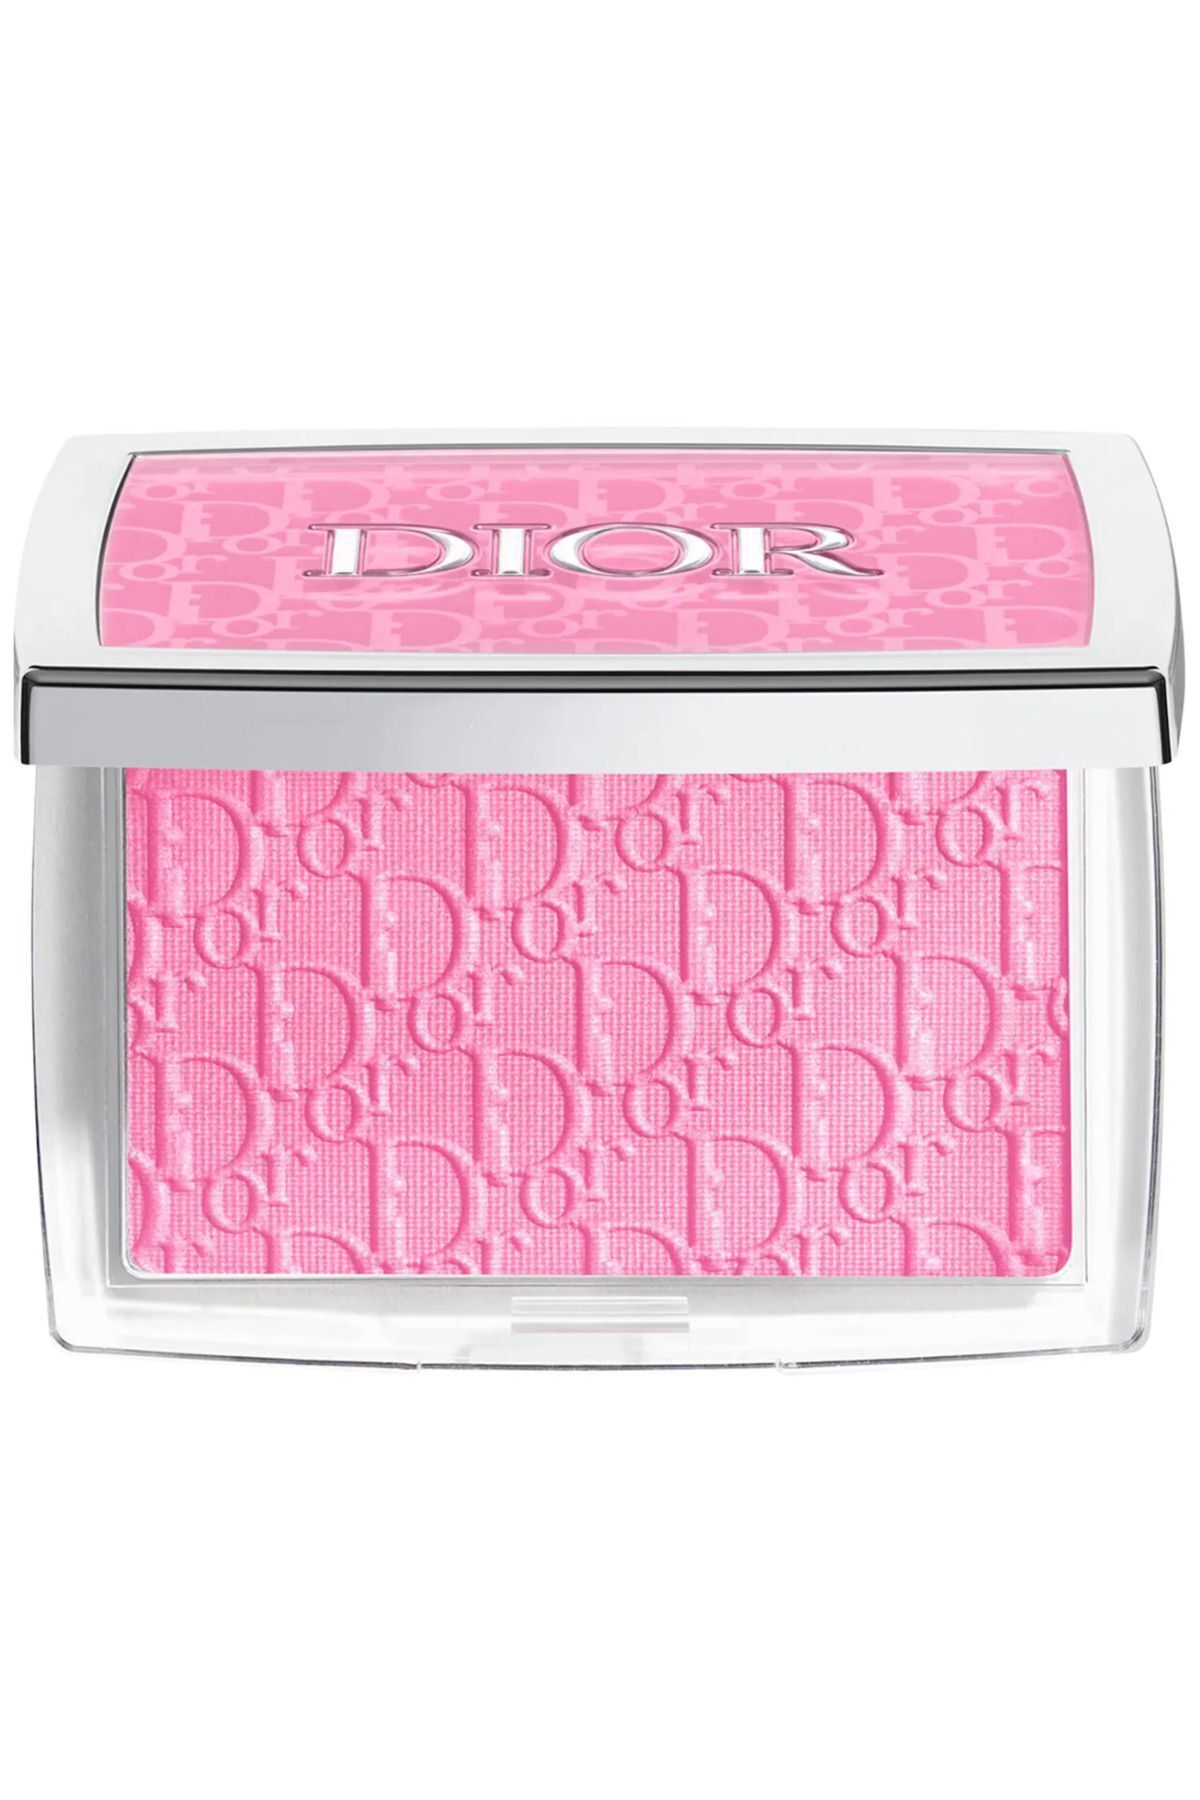 Dior Backstage Rosy Glow Blush Stariumcosmetics